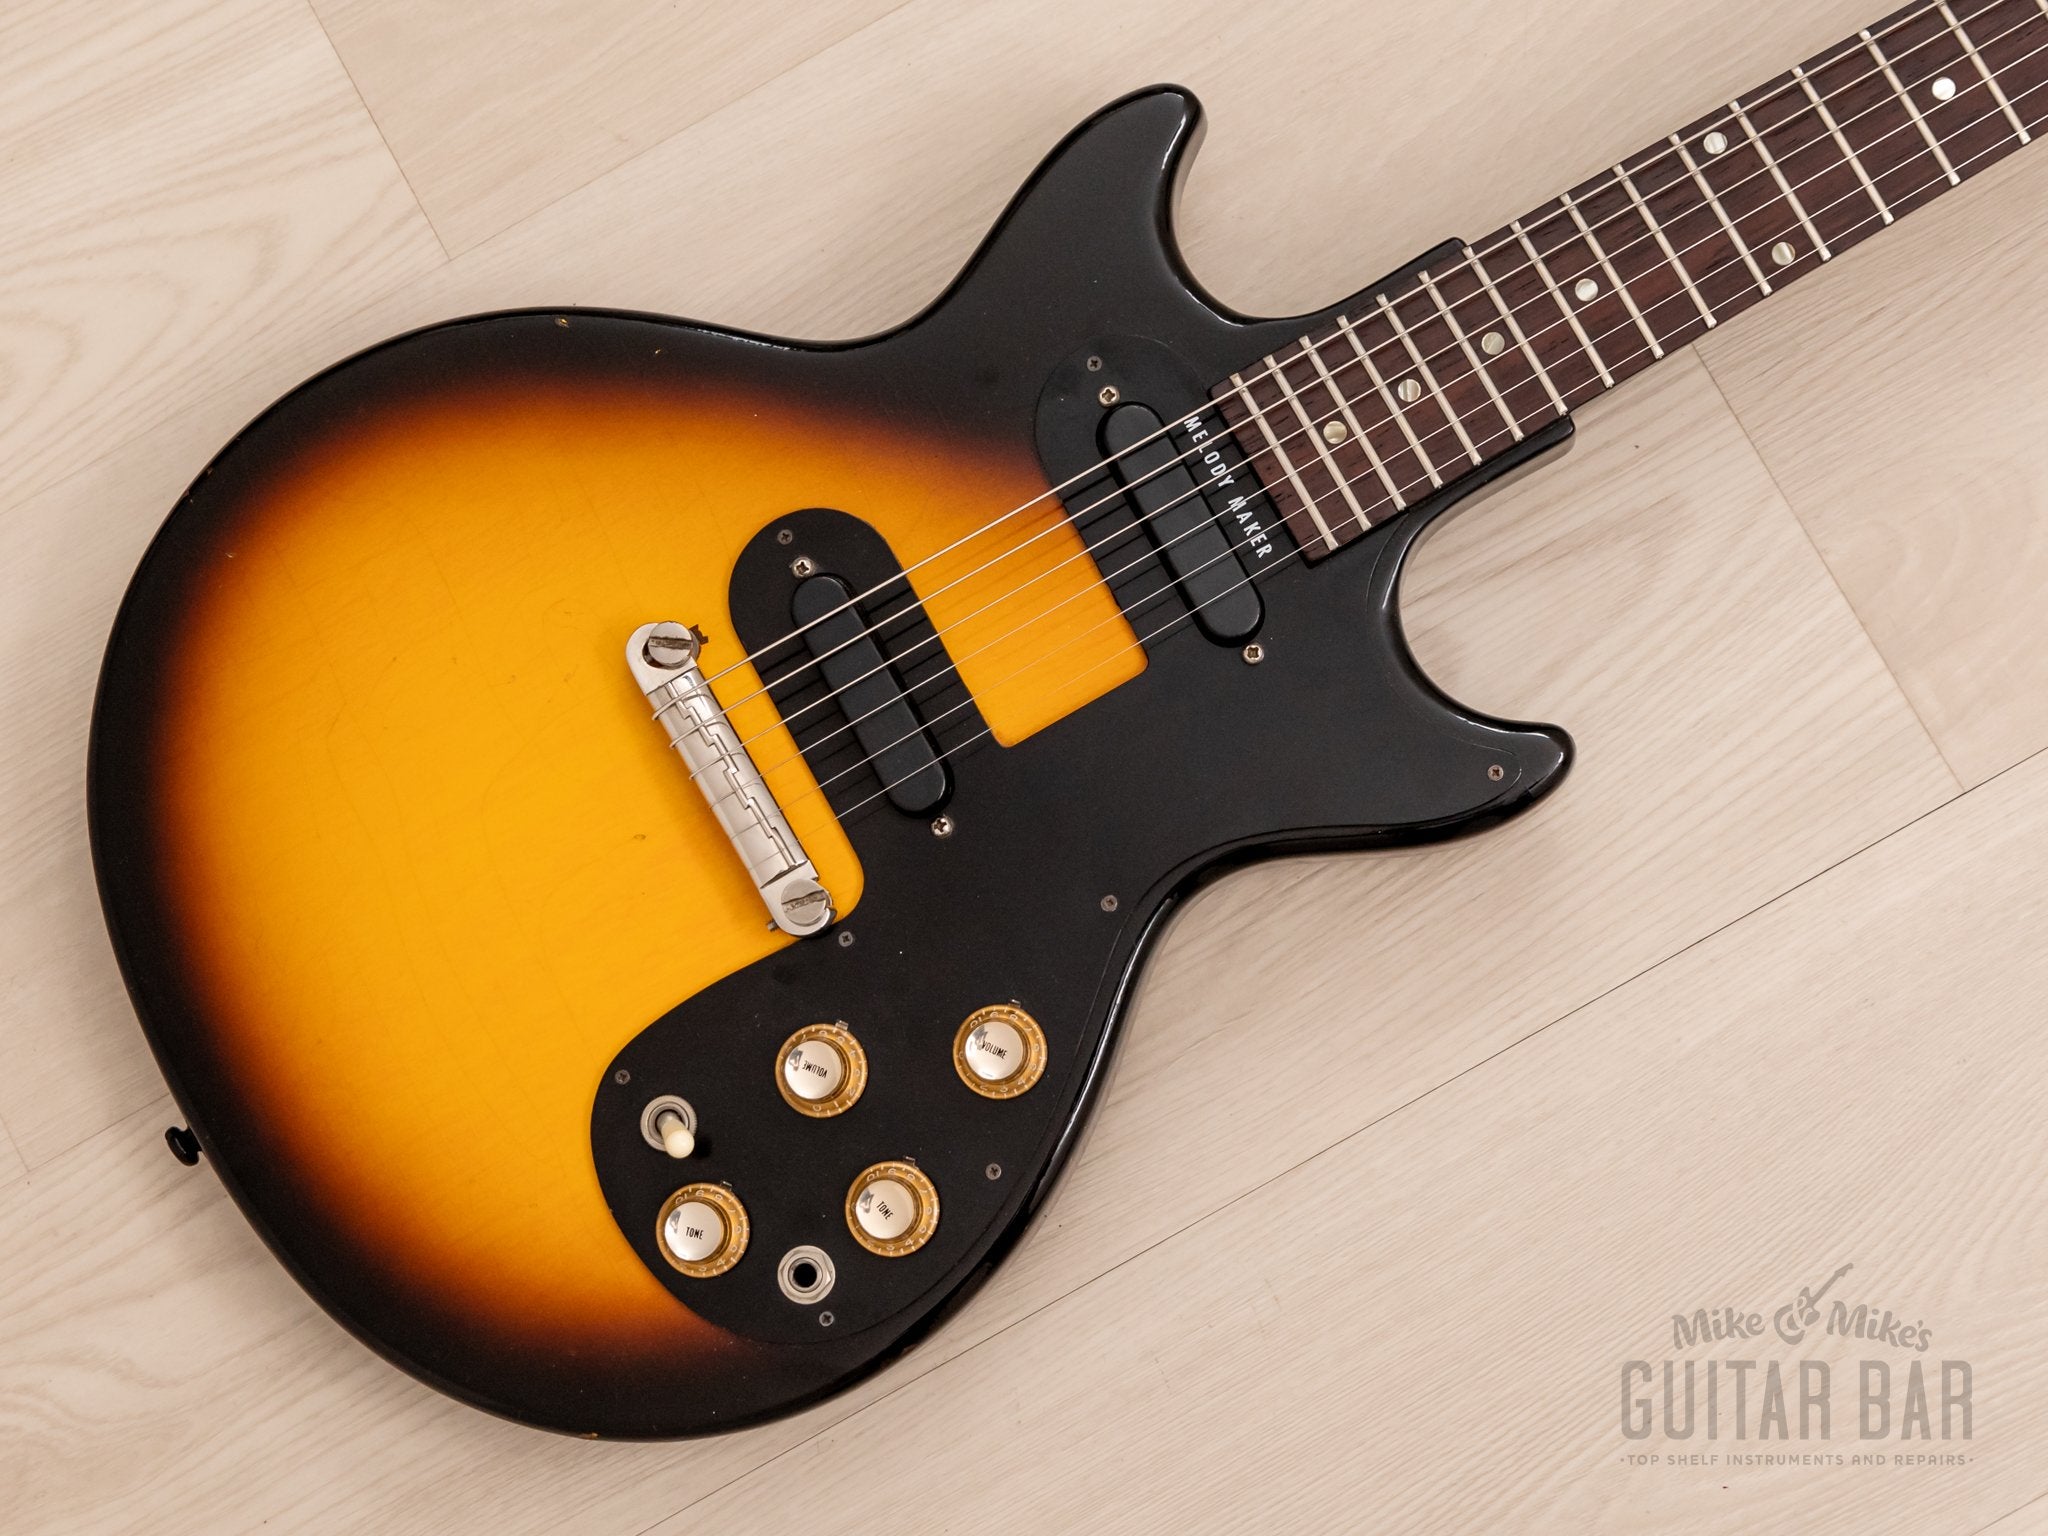 1964 Gibson Melody Maker D Double Pickup Vintage Guitar Sunburst w/ Case